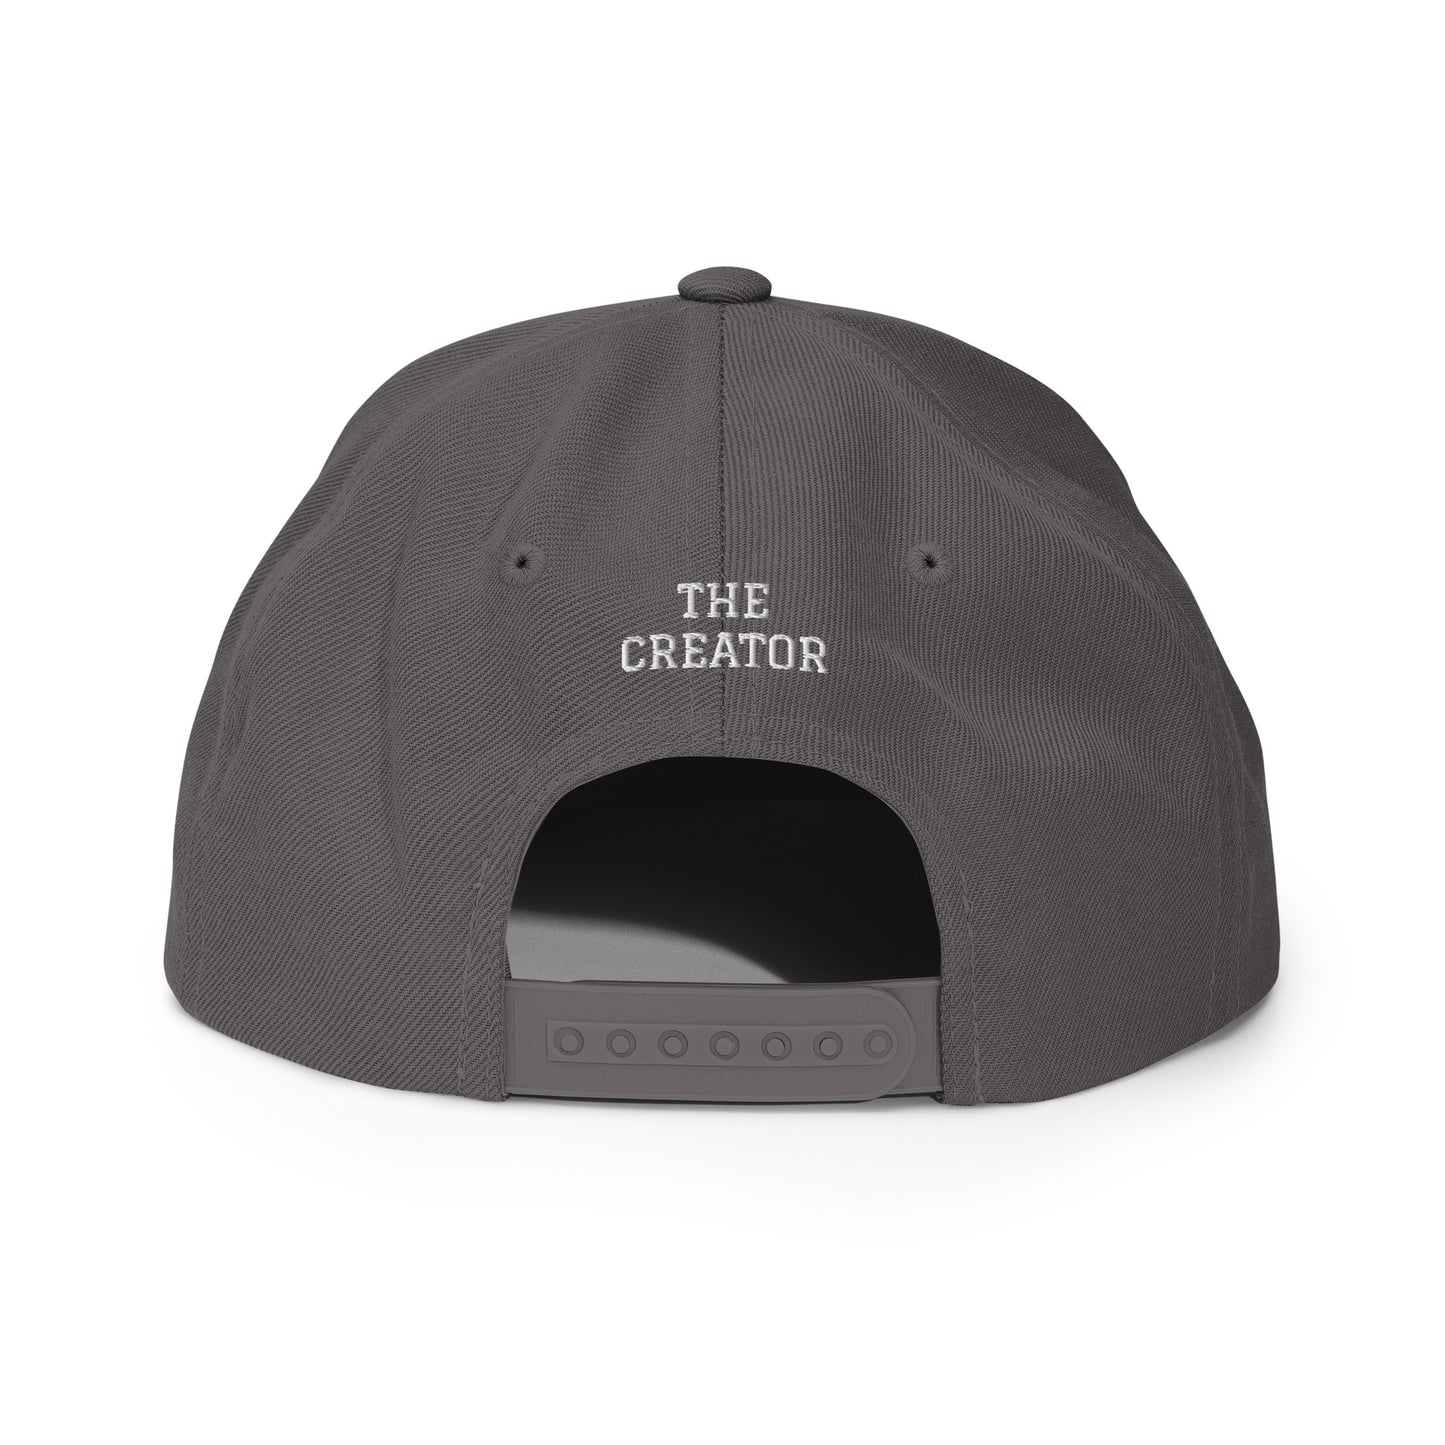 THE CREATOR Snapback Hat